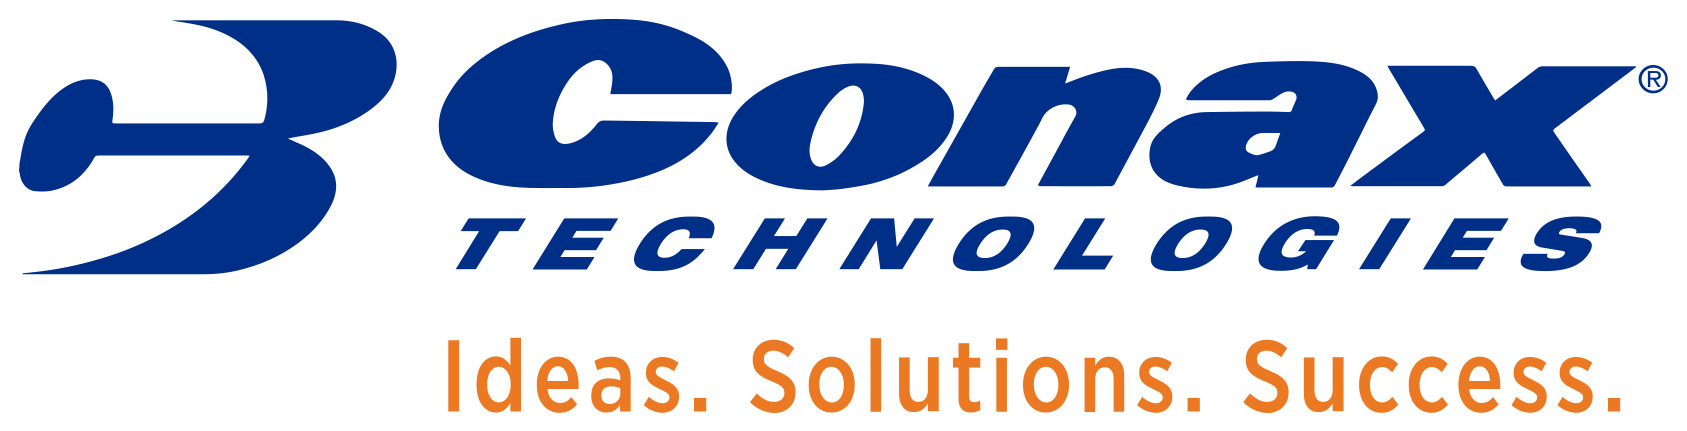 Conax Technologies